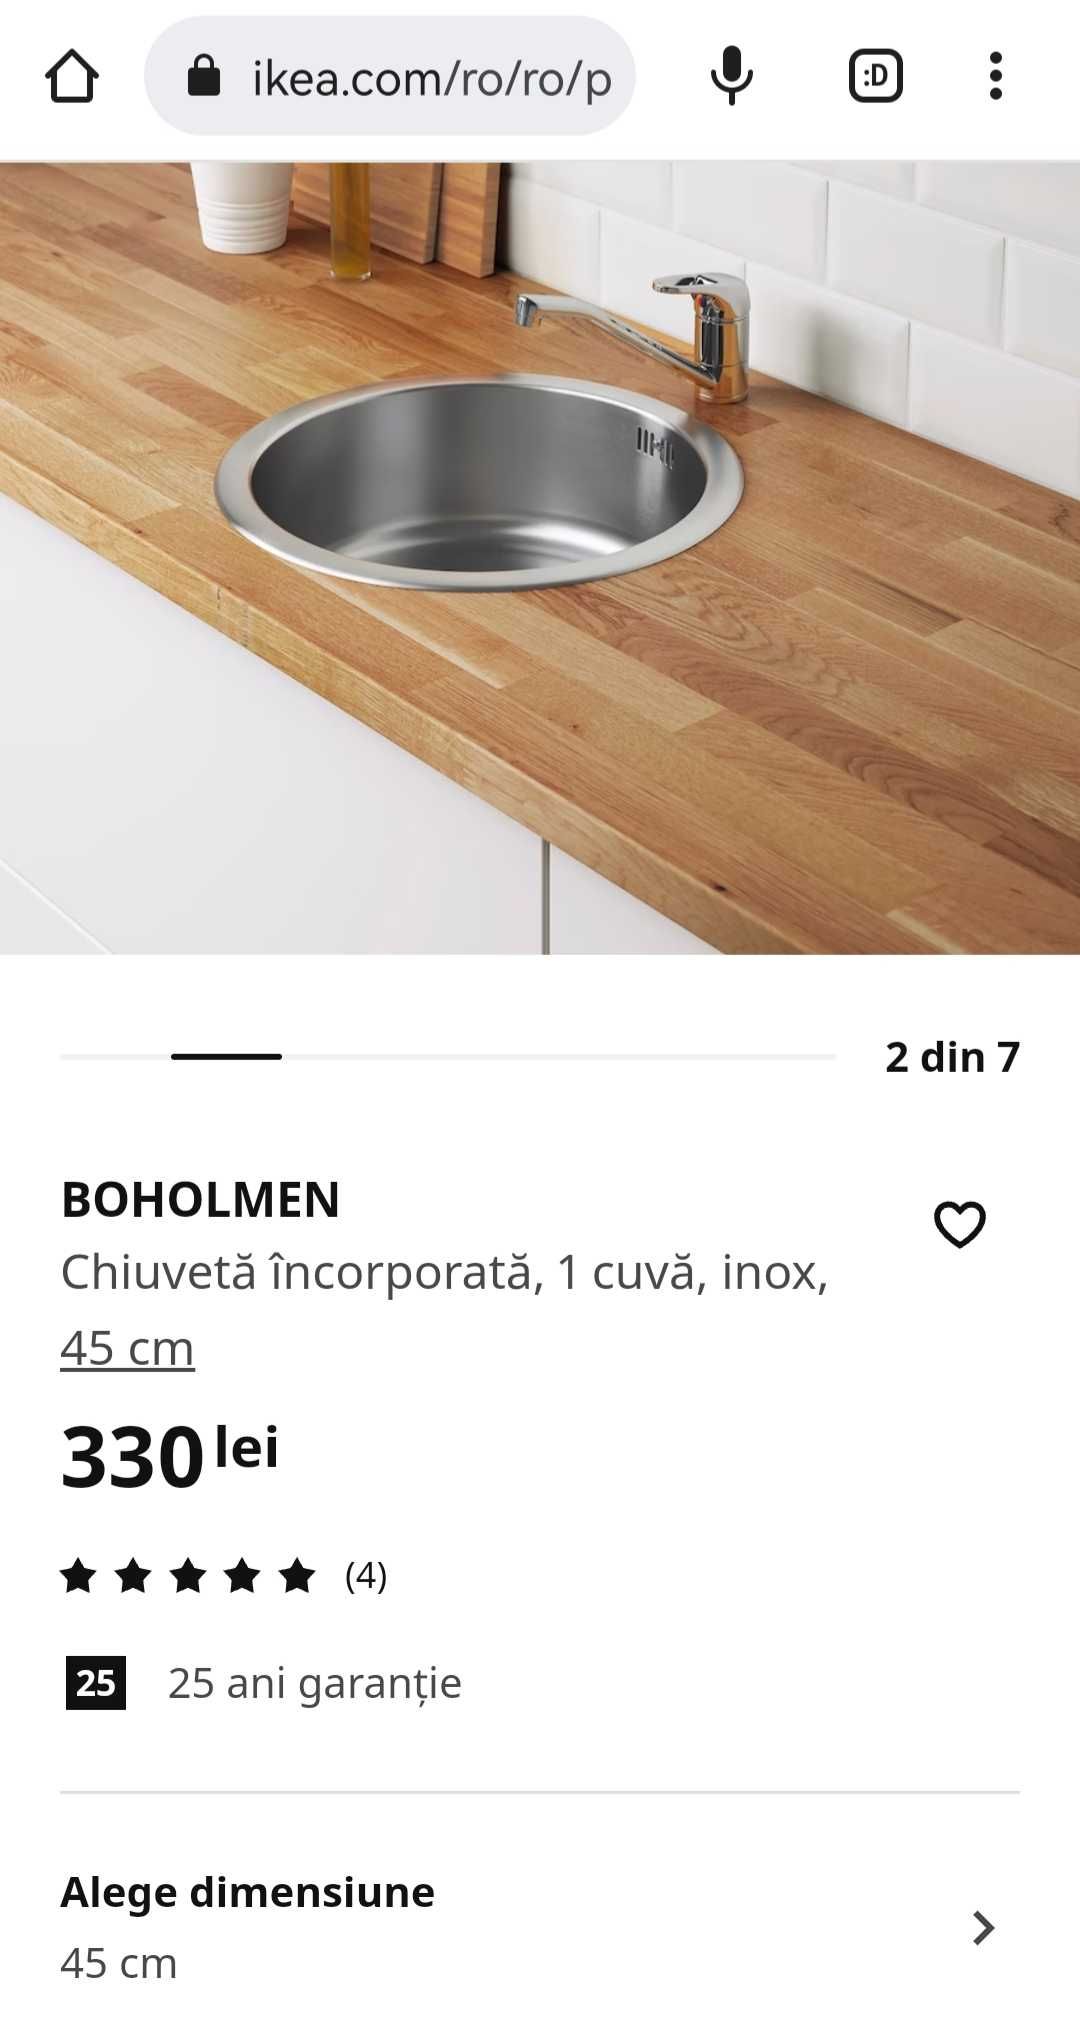 Chiuveta Ikea NOUA garantie 25ani, bon de casa inox incastrabila blat